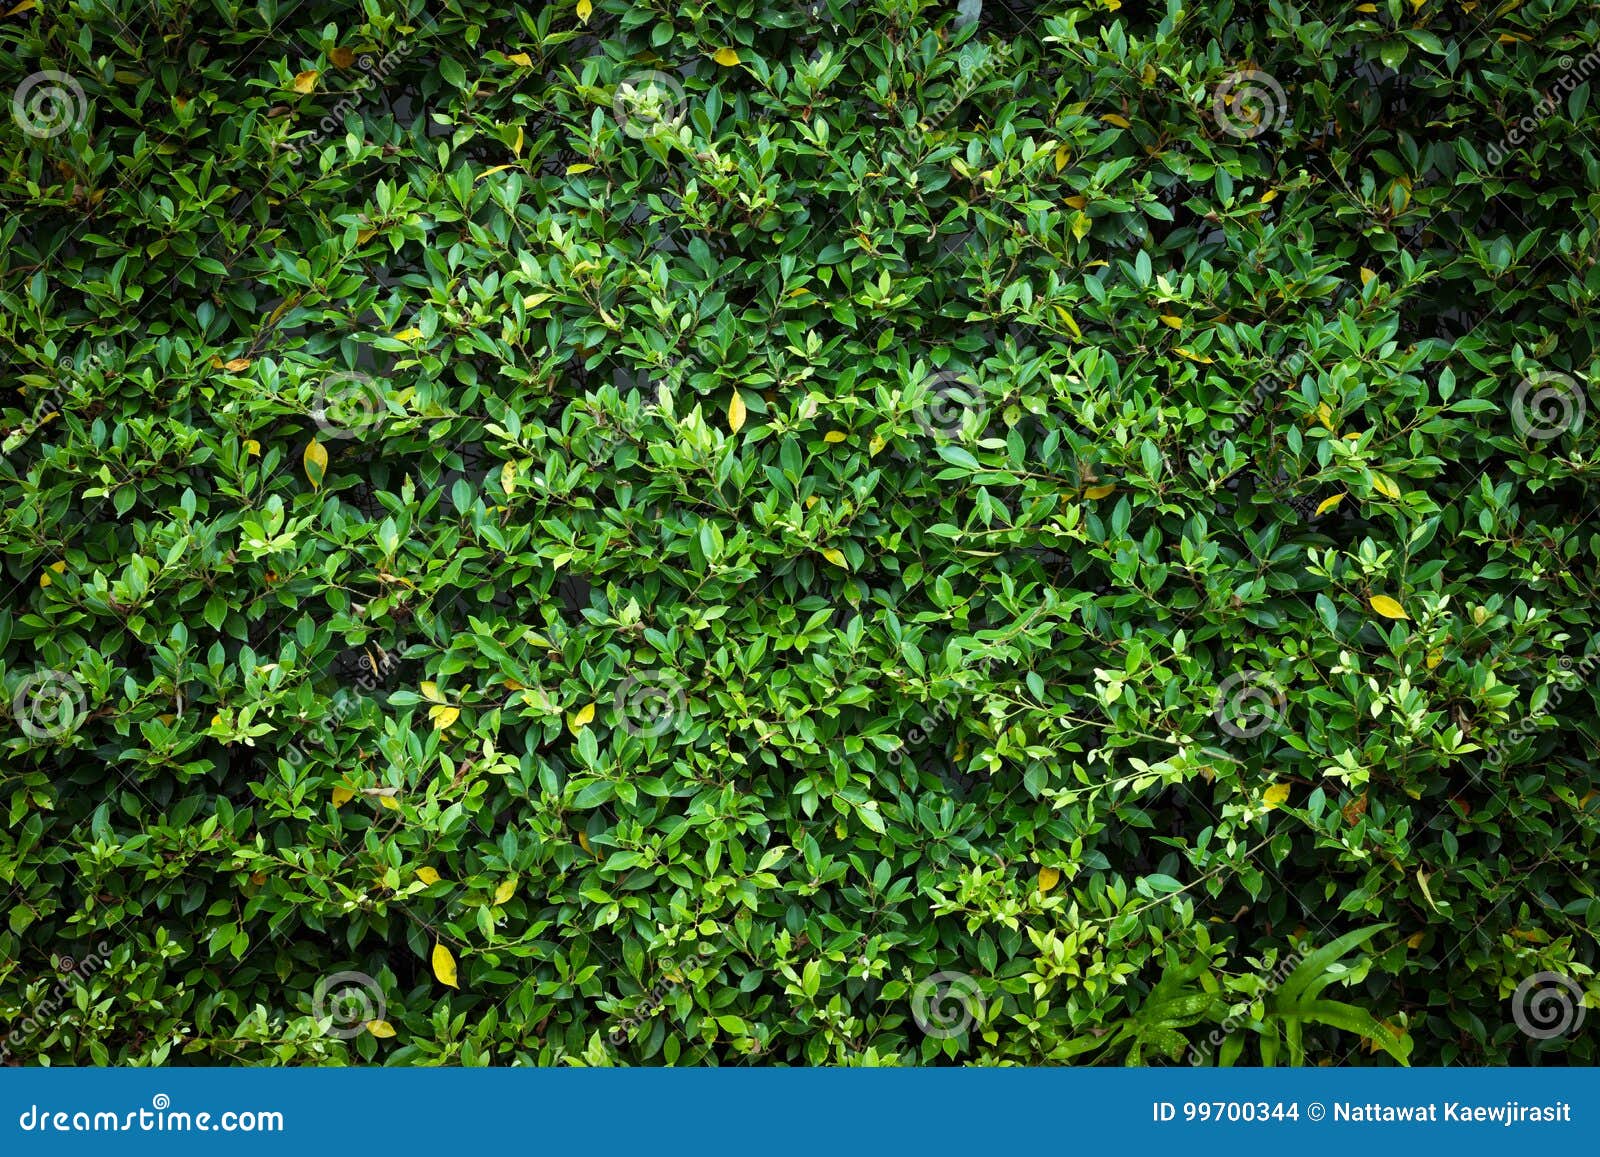 wall of shrubs texture